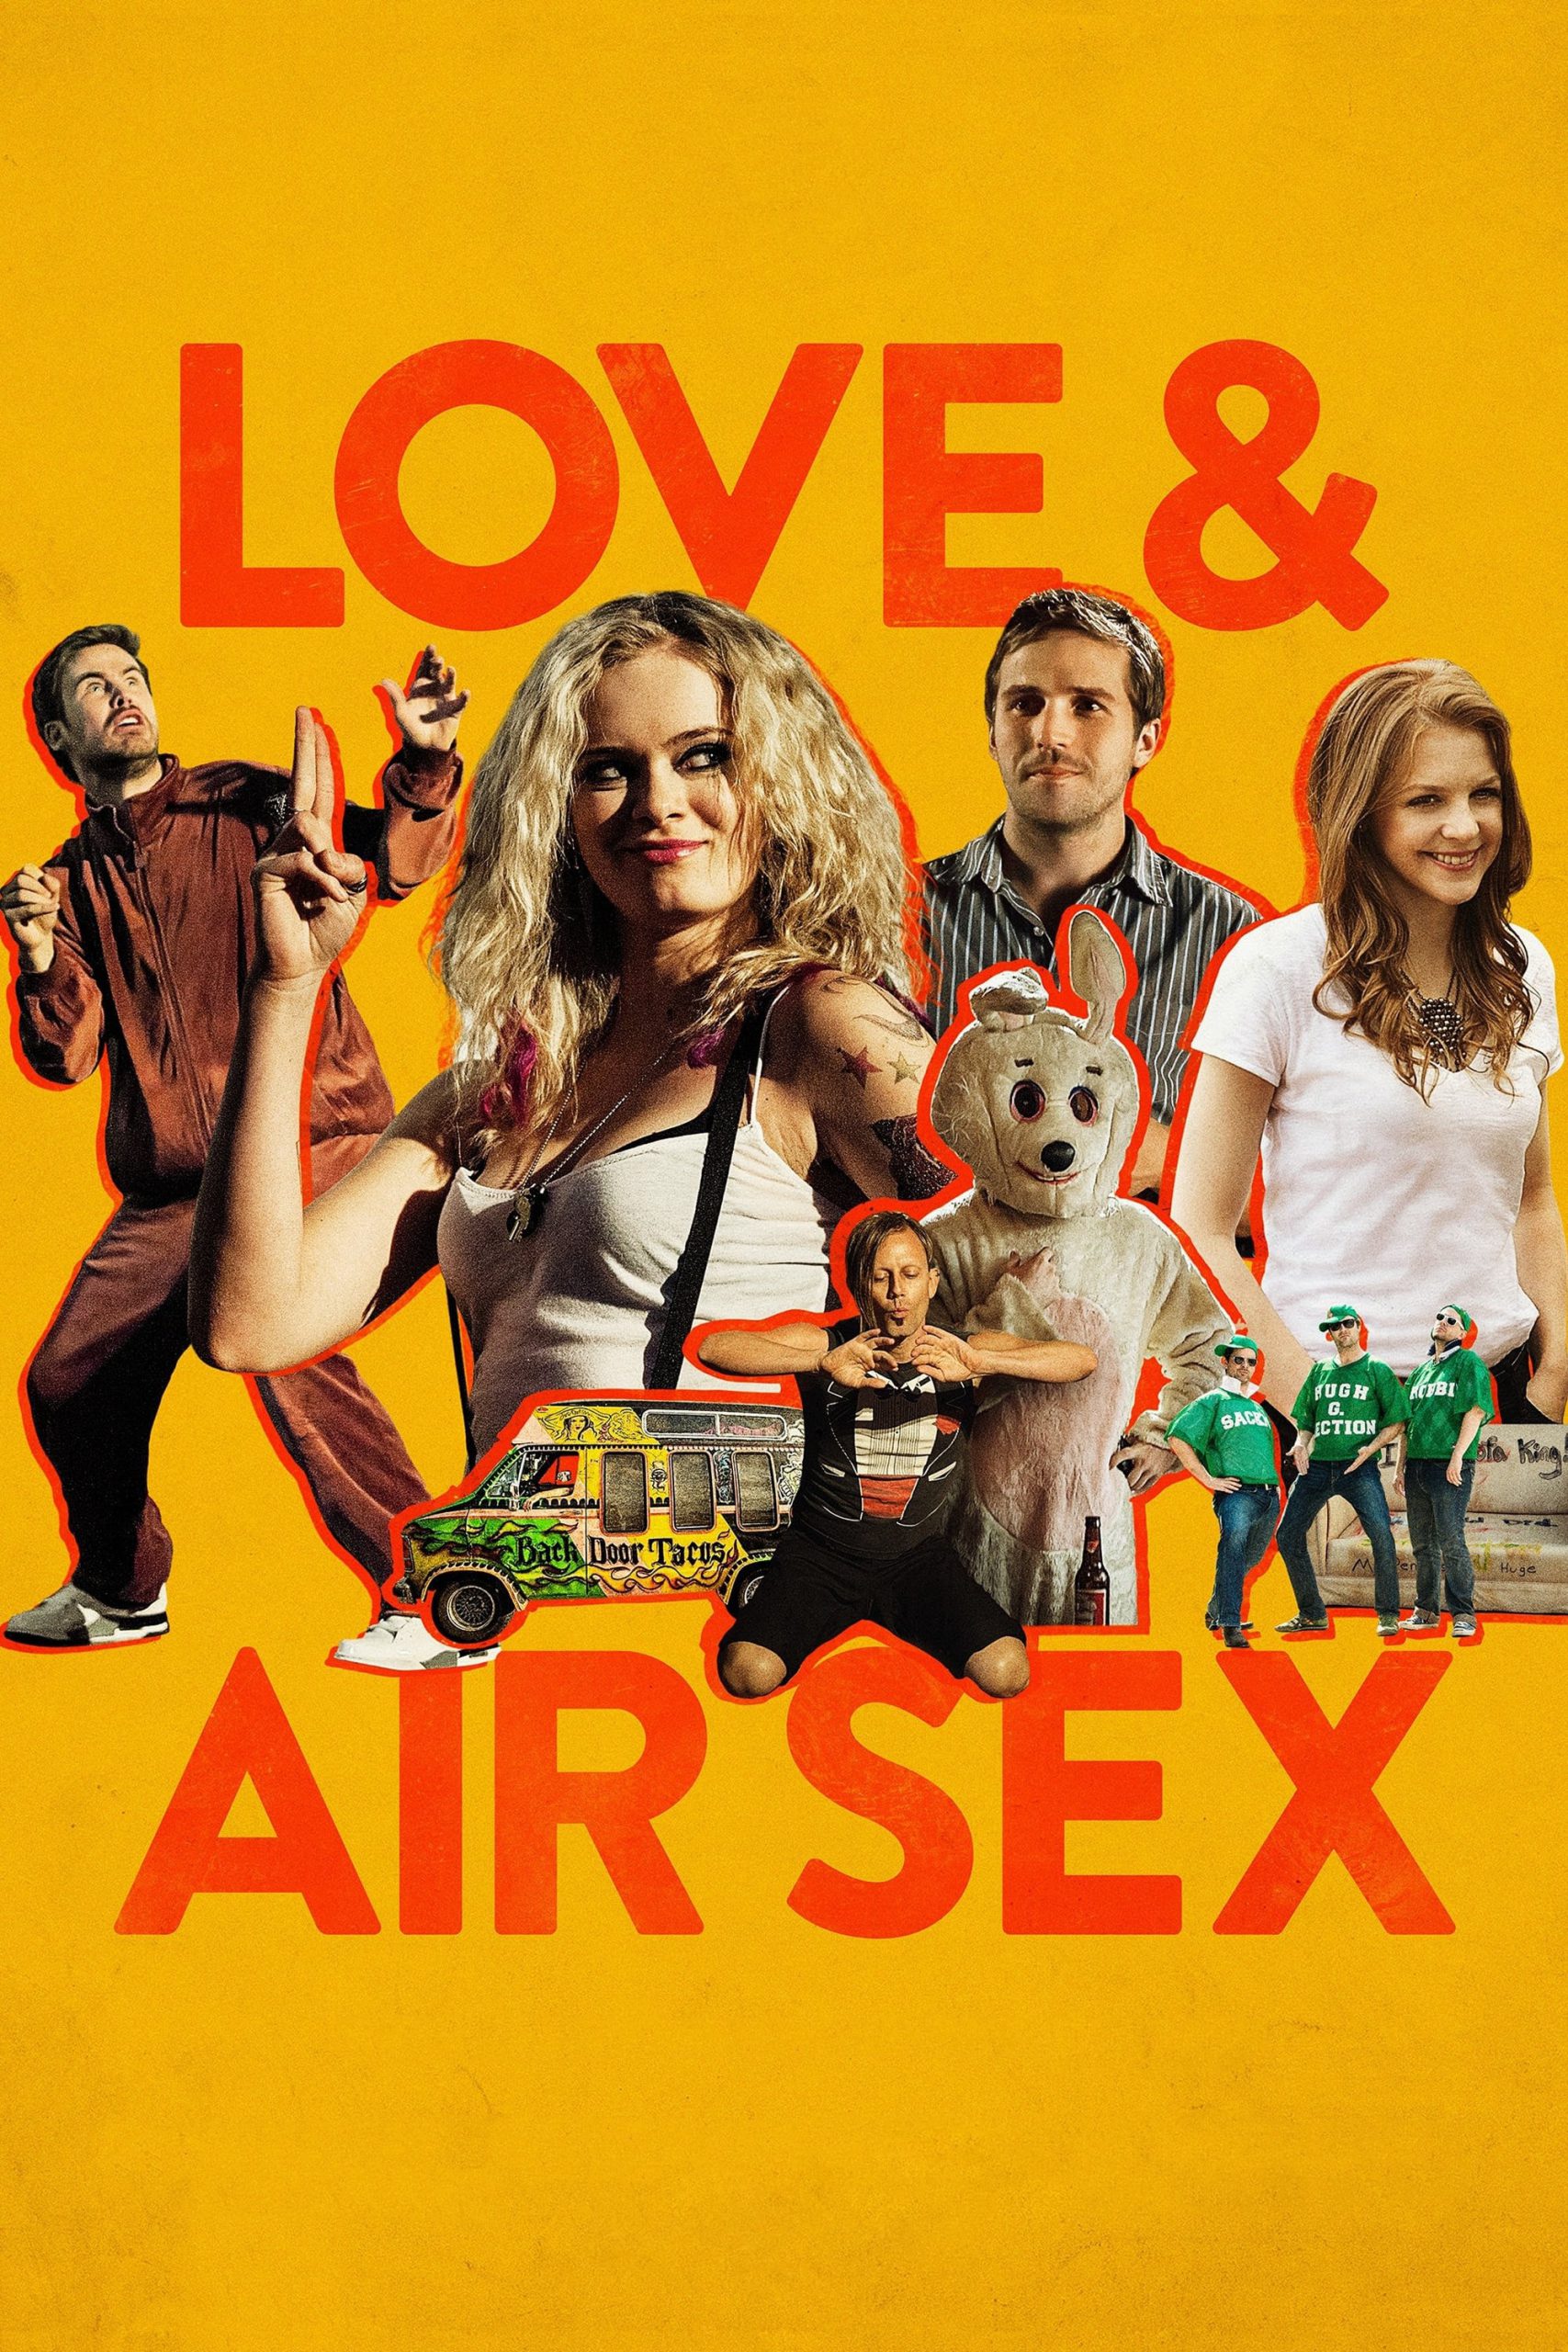 Love & air sex [Sub-ITA] (2013)